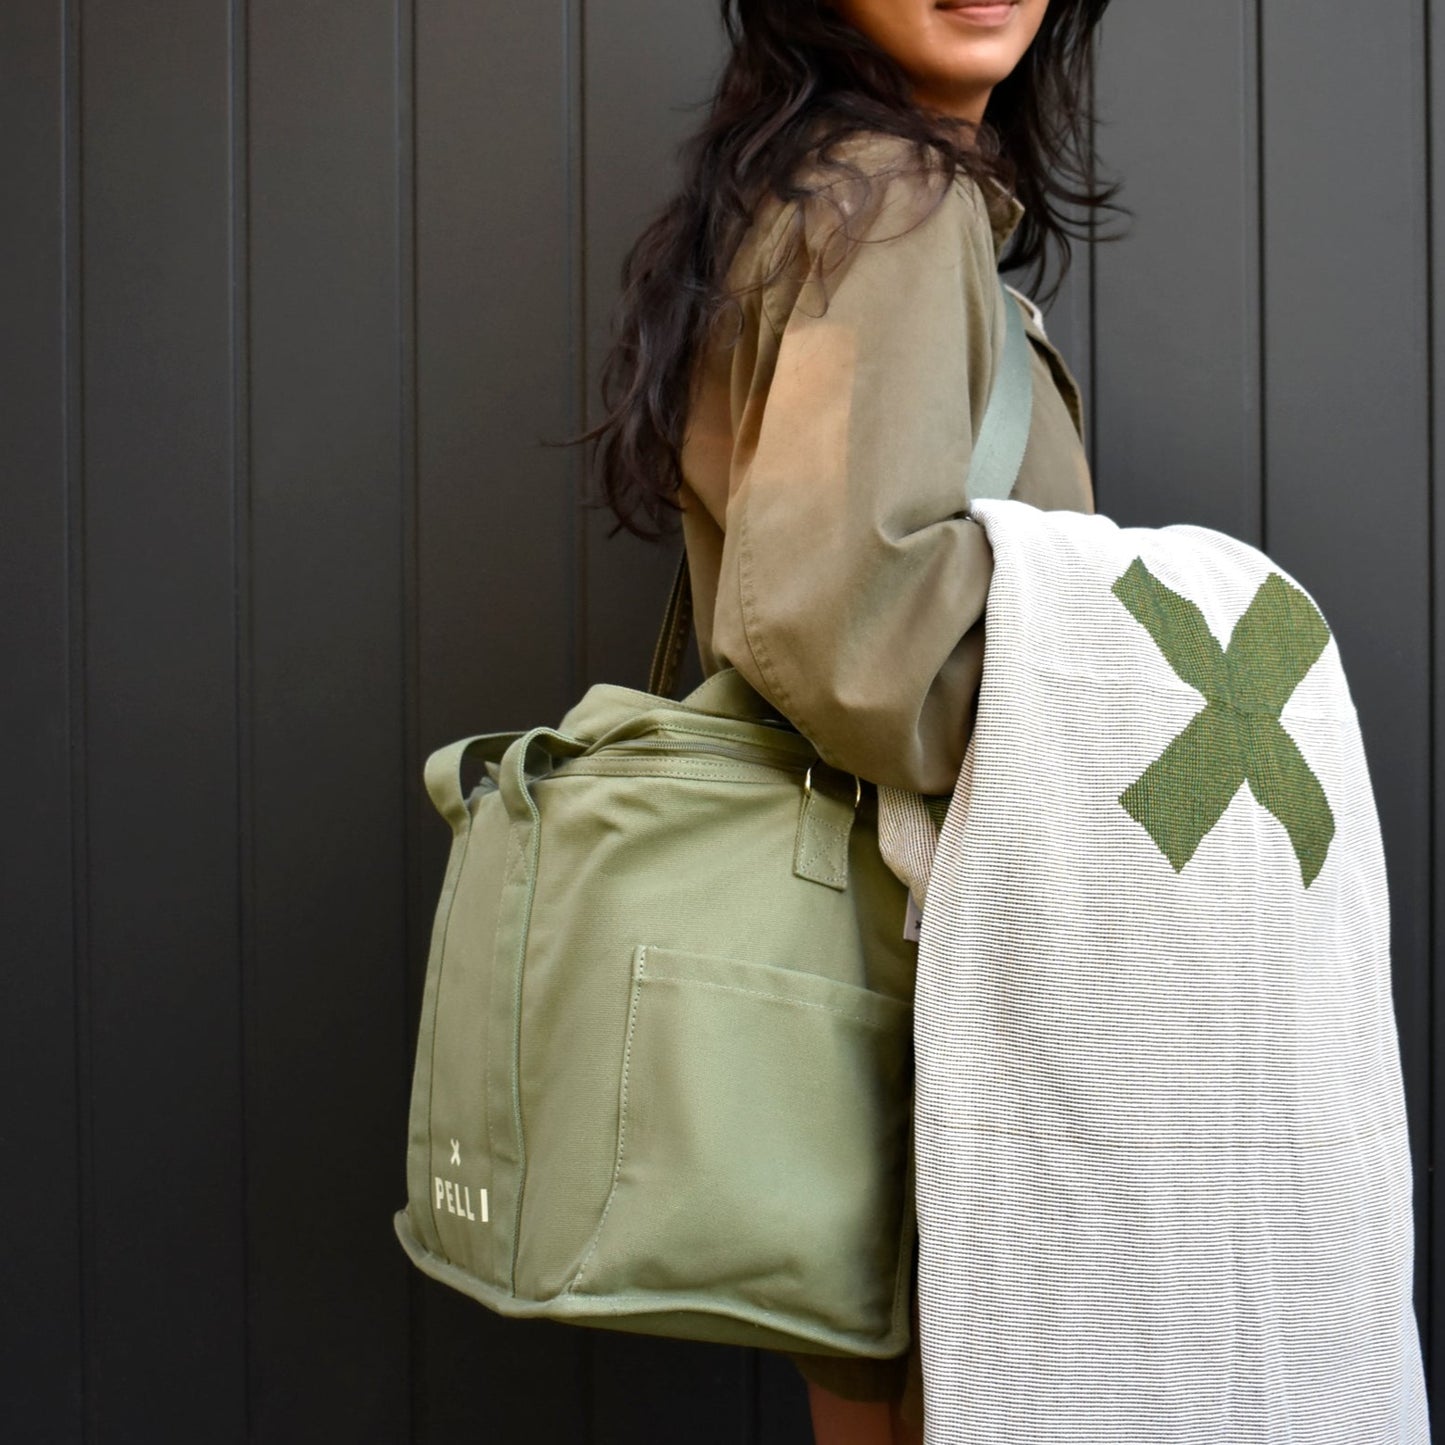 OK Chill Crossbody - Canvas Medium Cooler Bag with Shoulder Strap in Eucalyptus Green